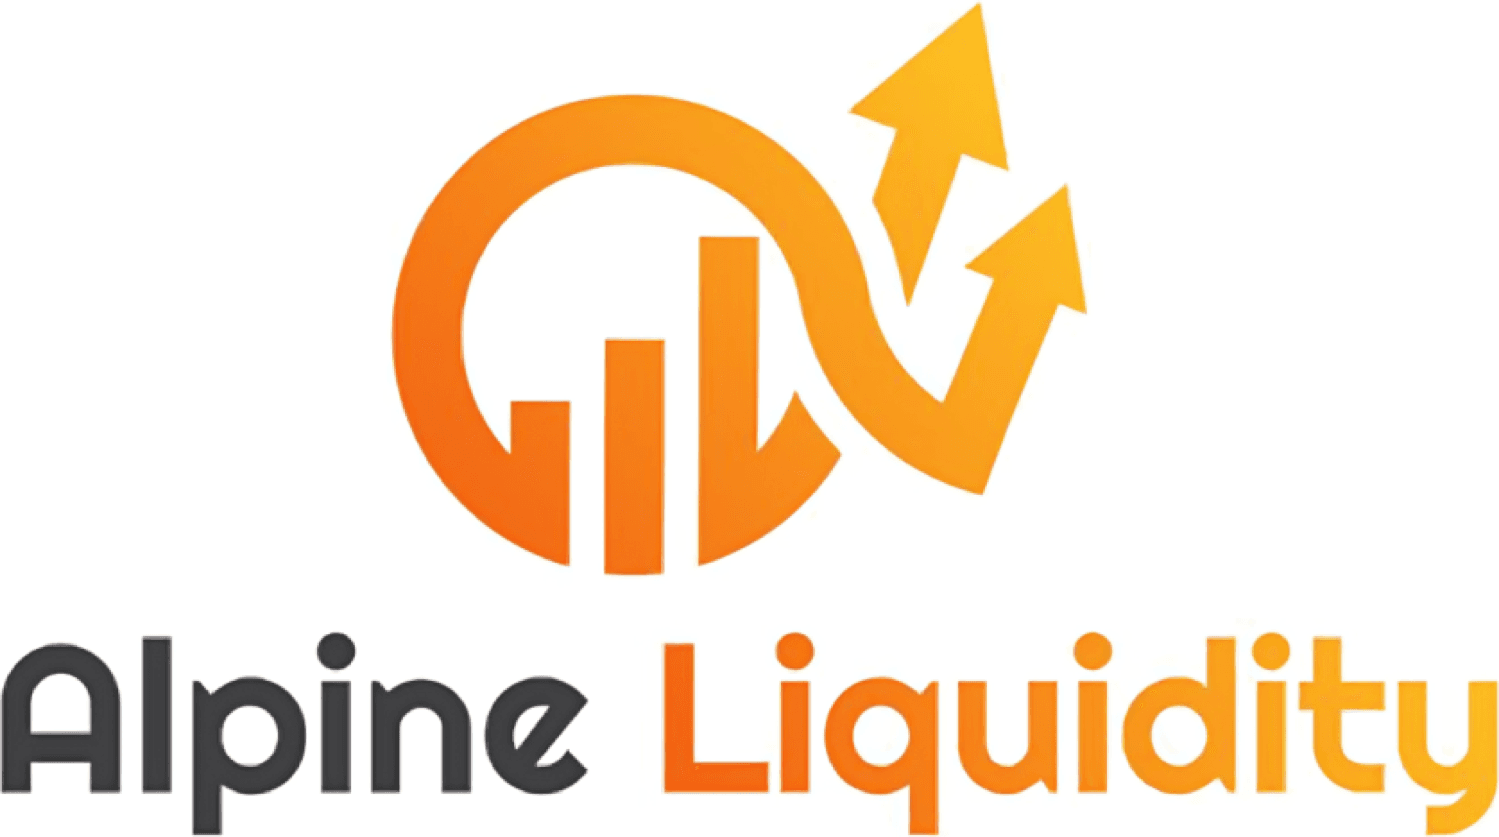 Alpine Liquidity Limited